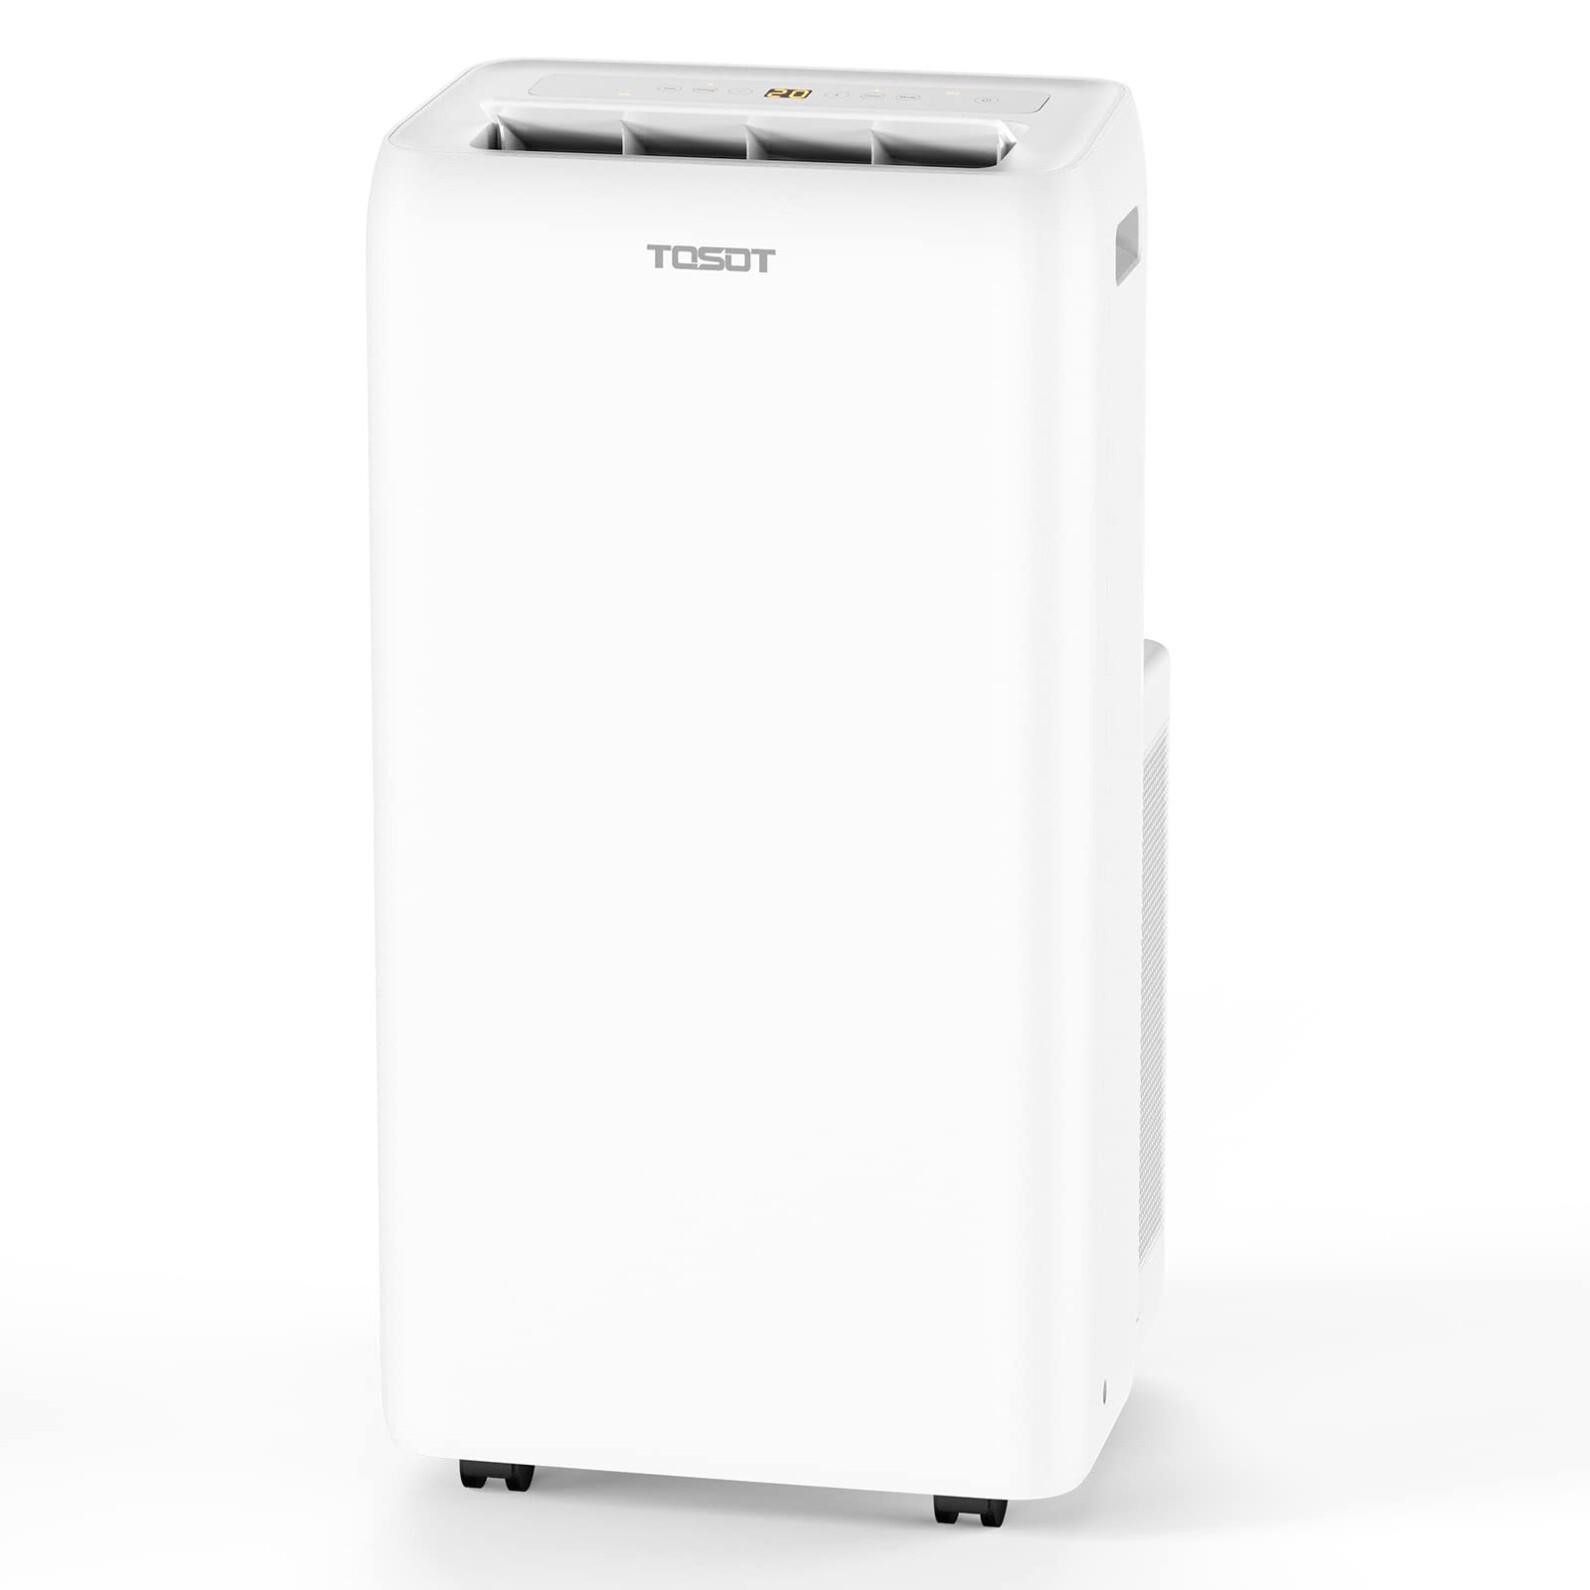 TOSOT Portable Air Conditioner 12,000 BTU Aolis Se